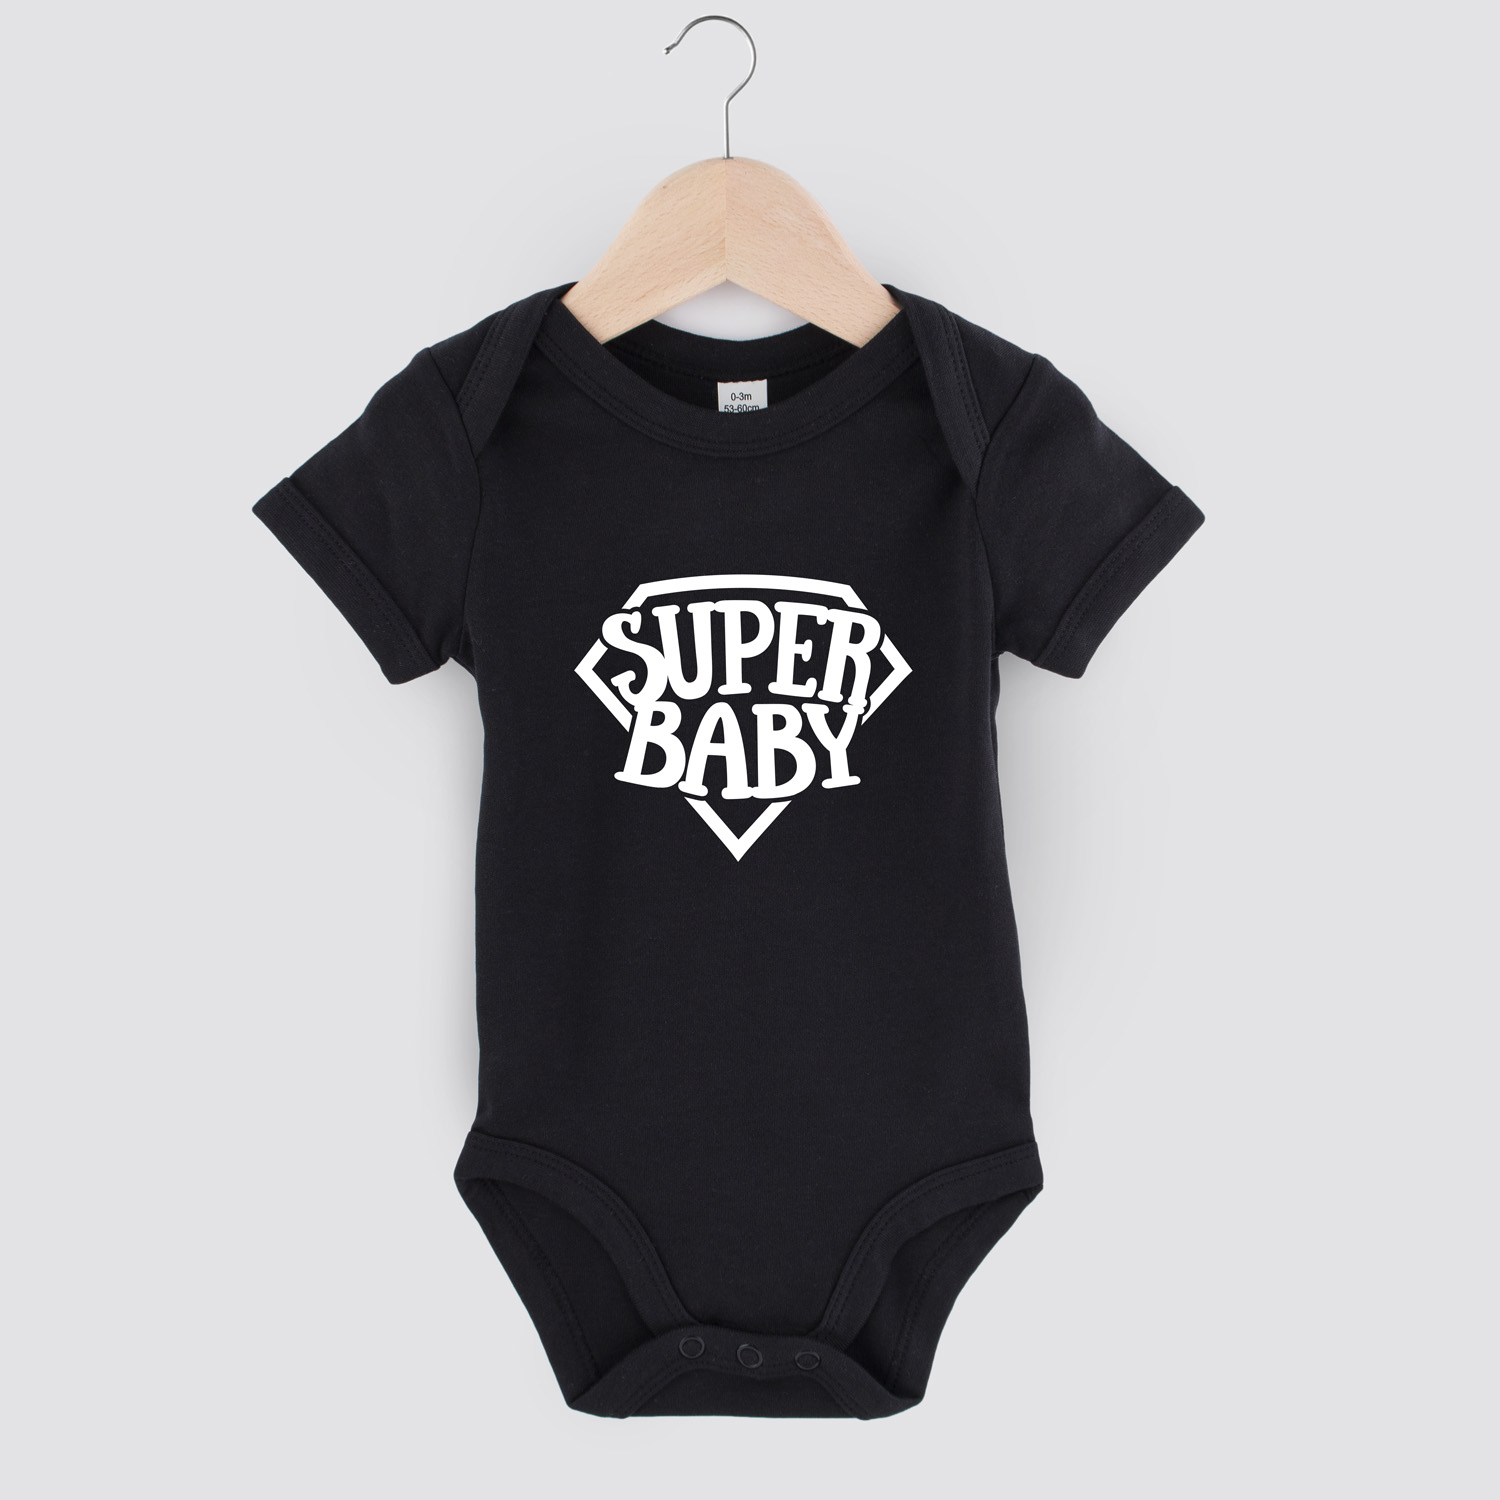 Super baby | Baby romper | my fabulous life.